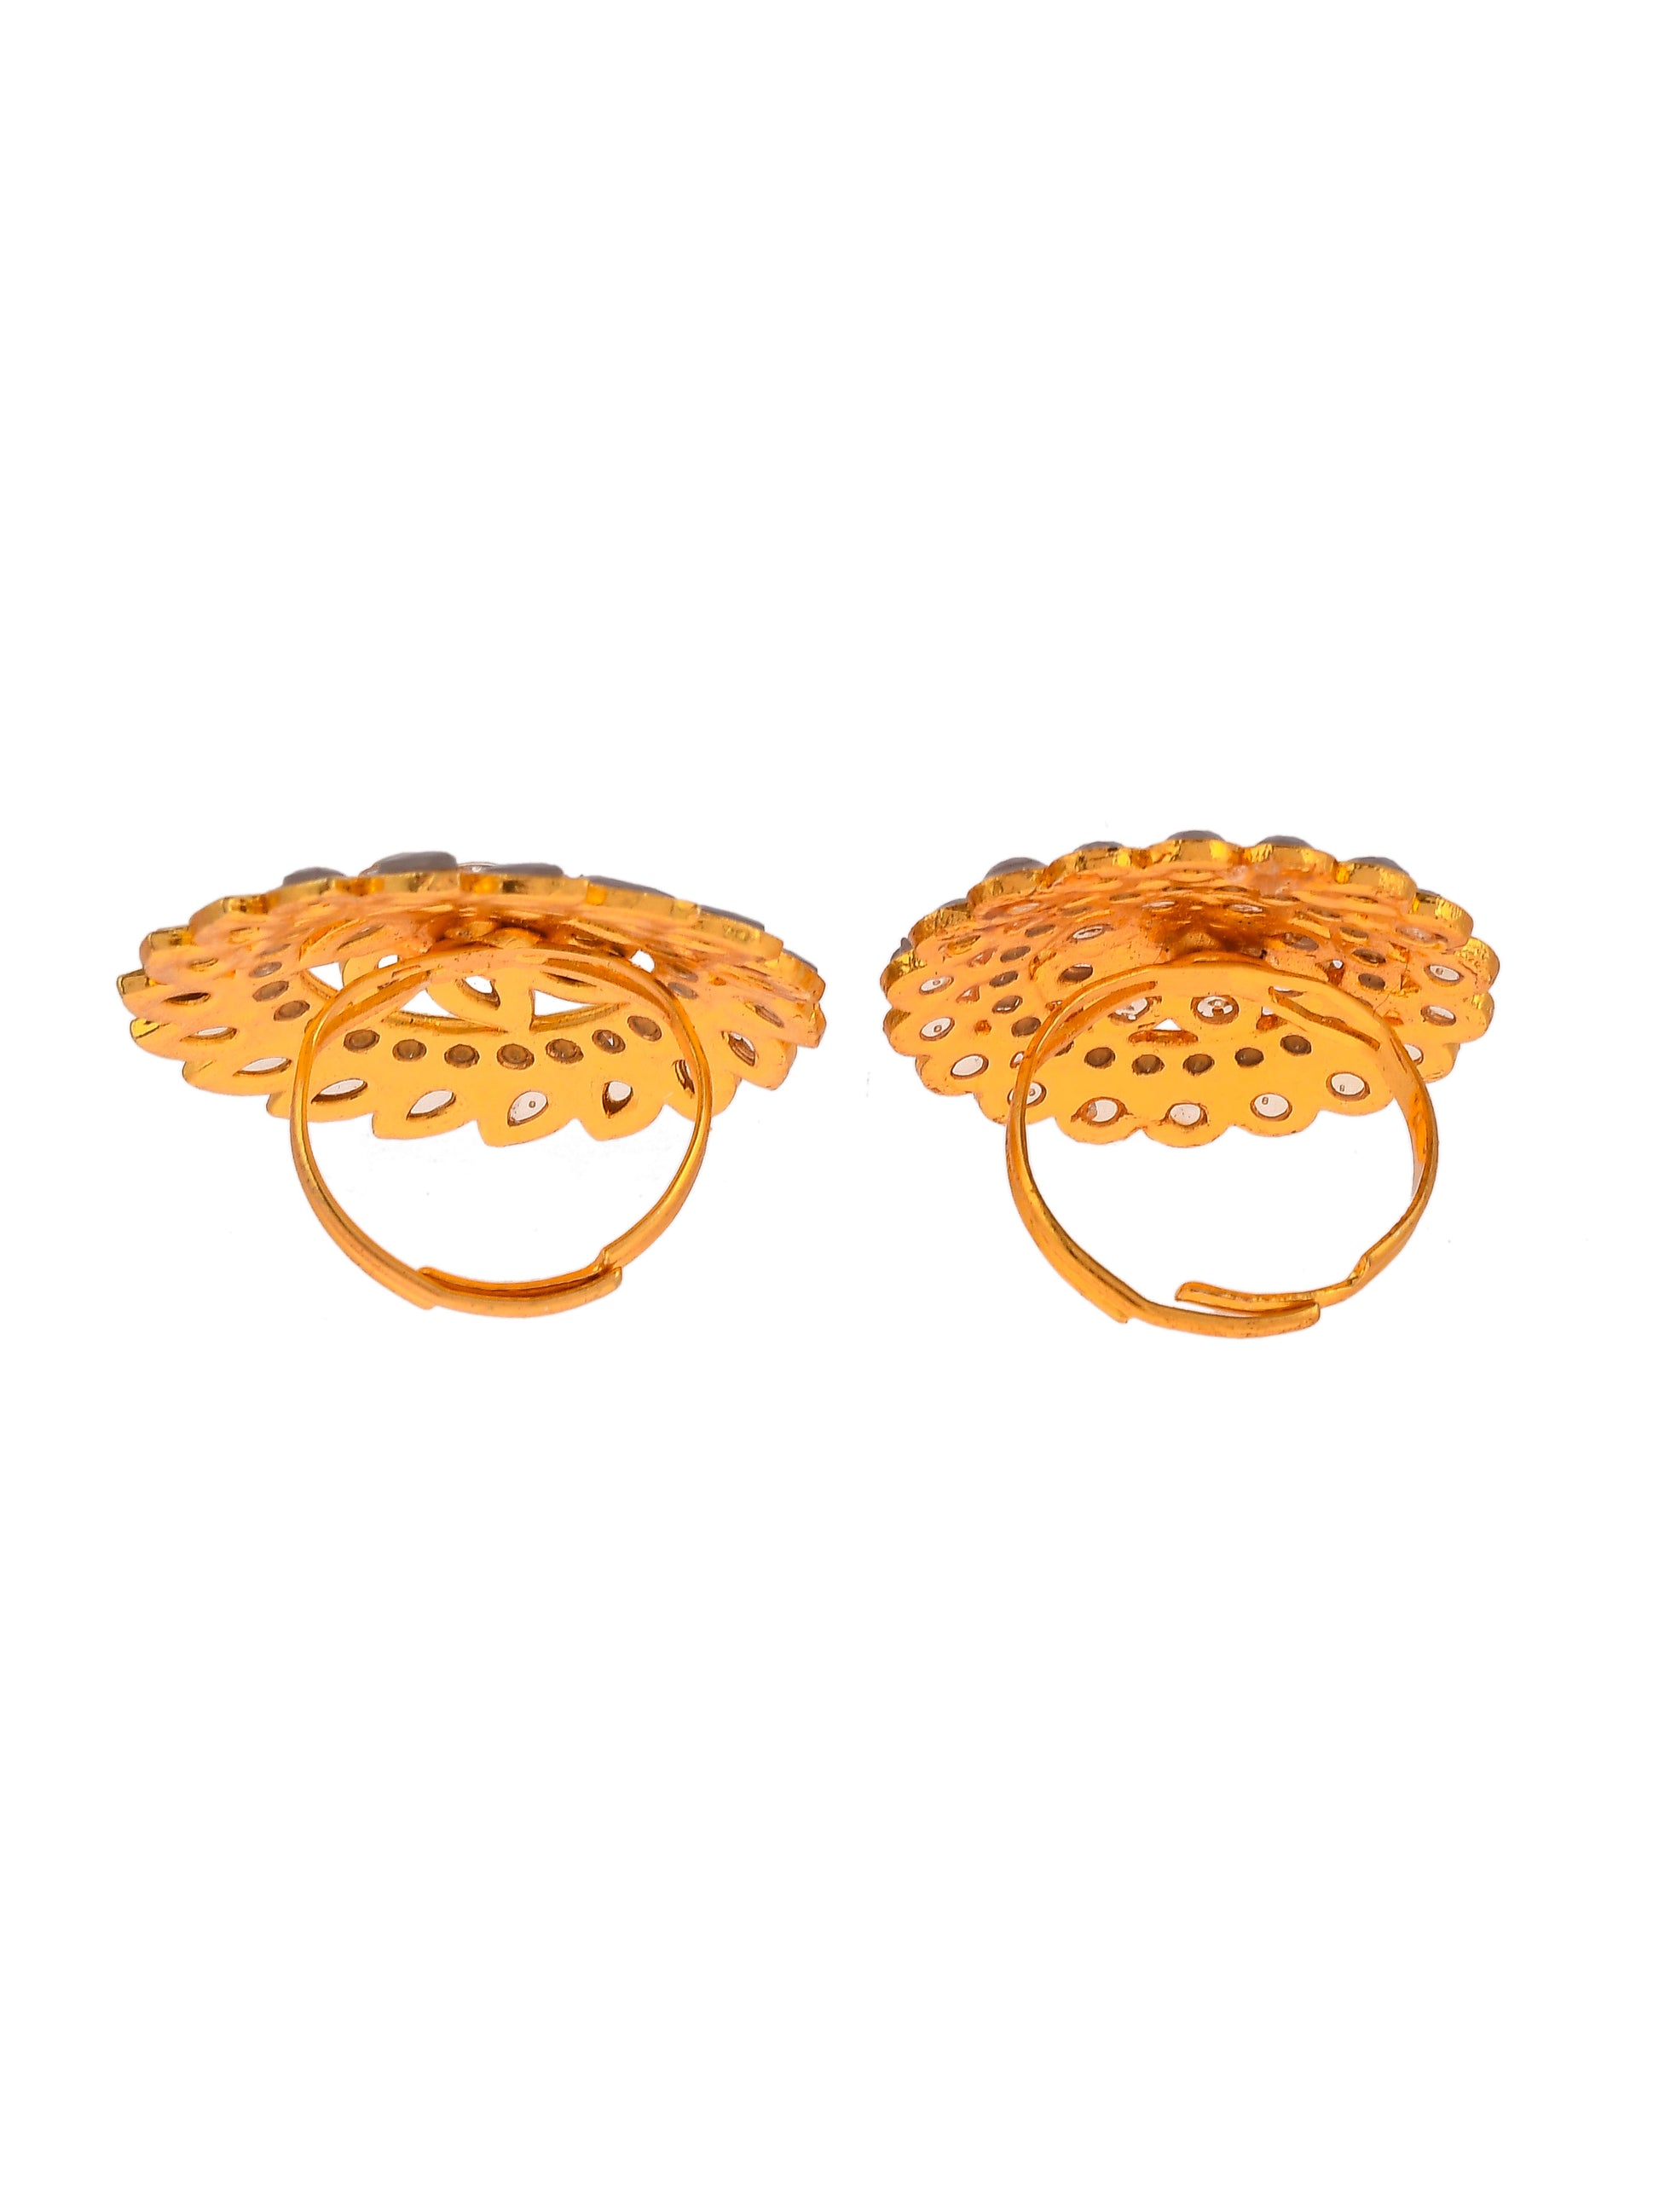 Set of 2 Gold Plated Kundan Floral Adjustable Finger Rings for Women